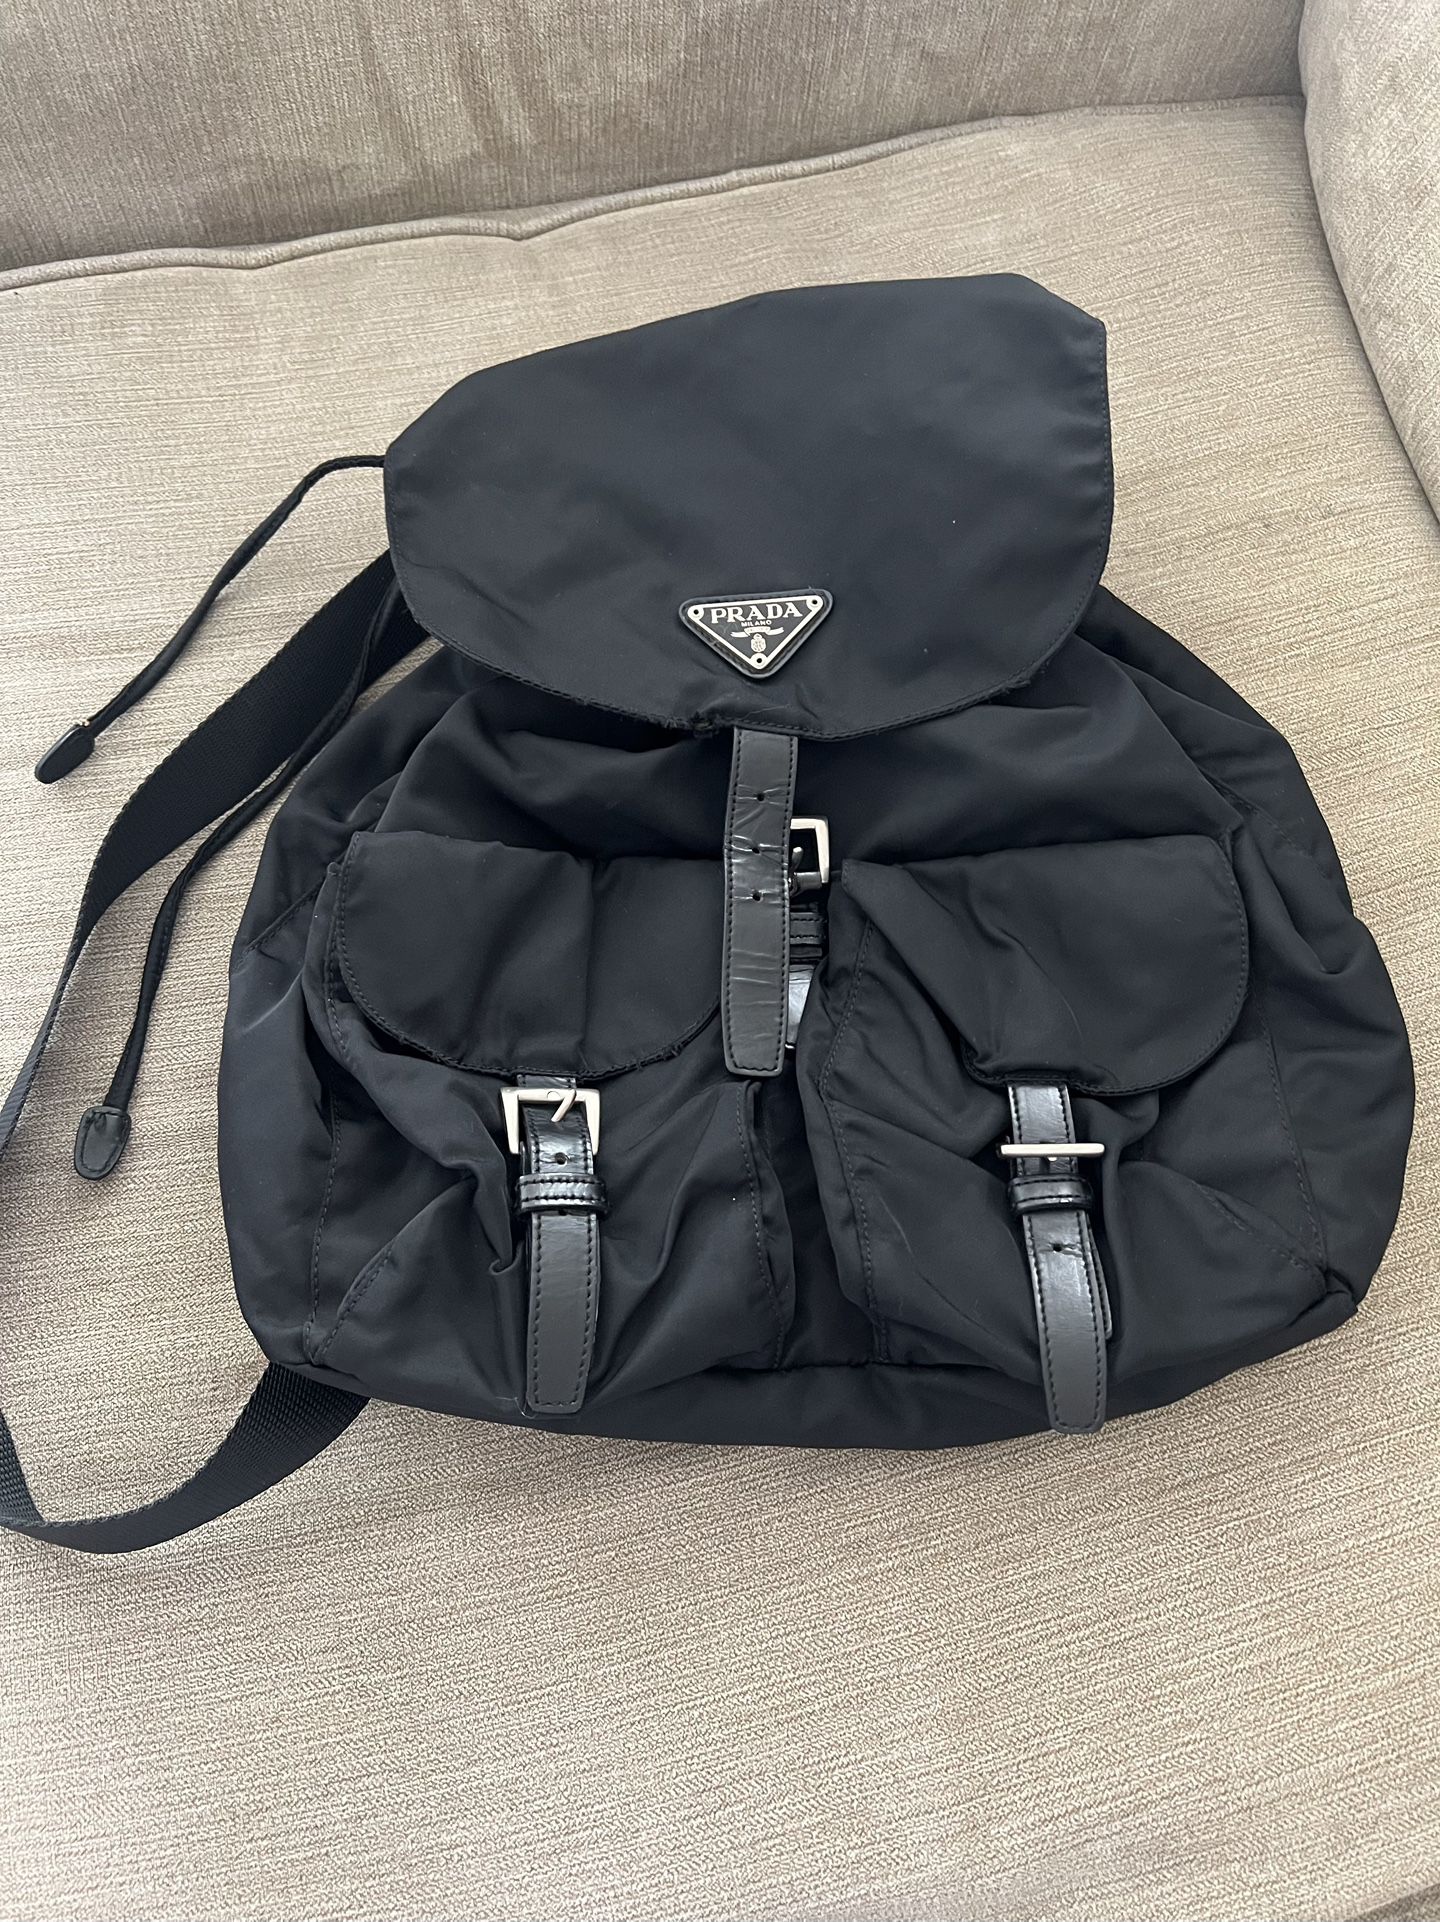 Authentic Prada Re-Nylon Drawstring Backpack